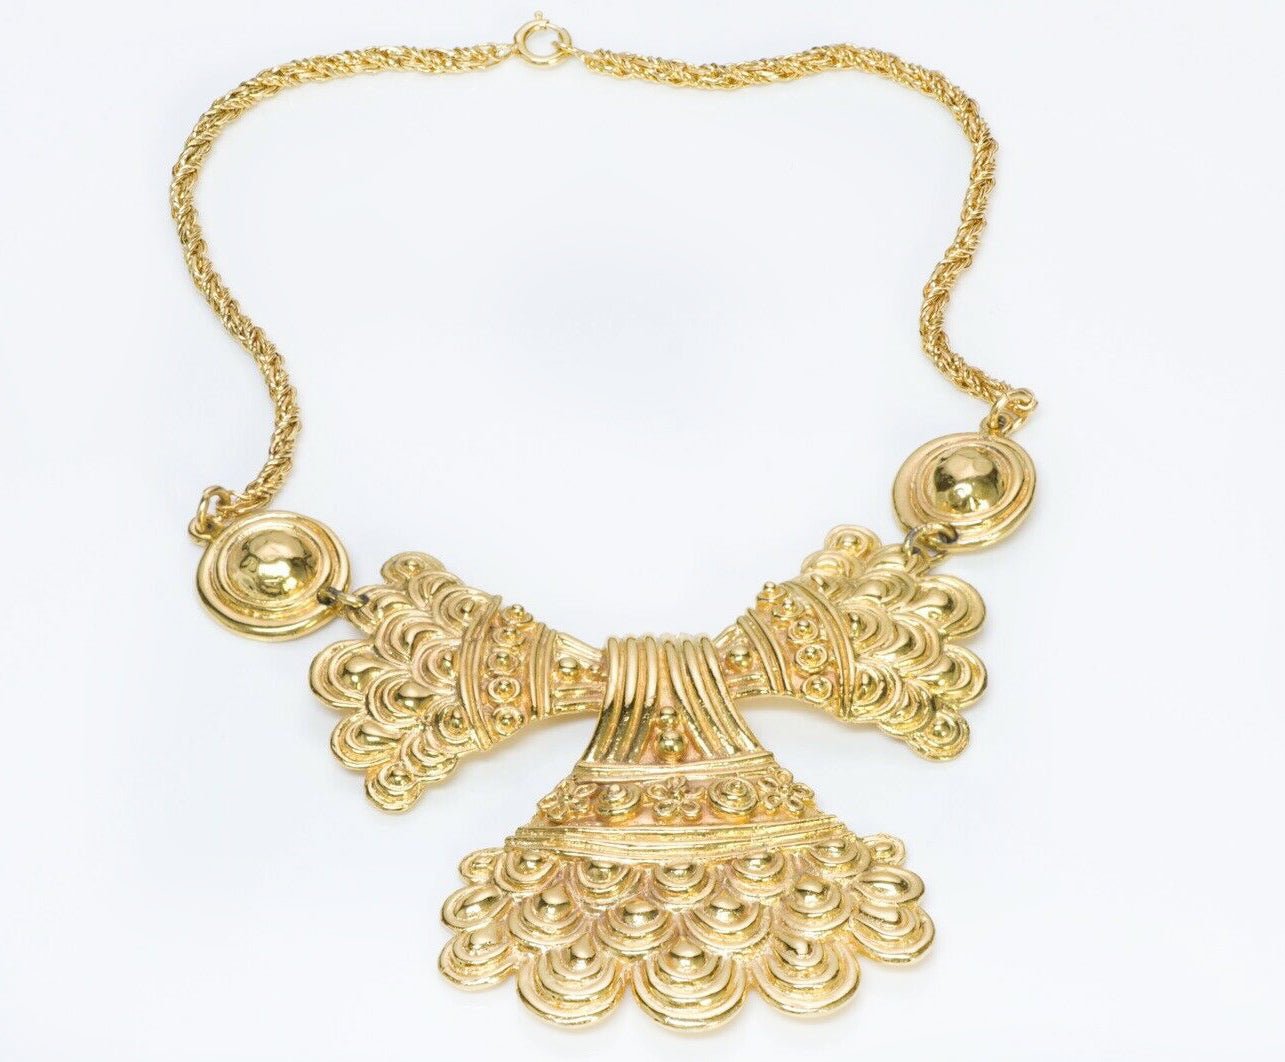 Christian Dior Henkel & Grosse 1971 Etruscan Style Pendant Necklace